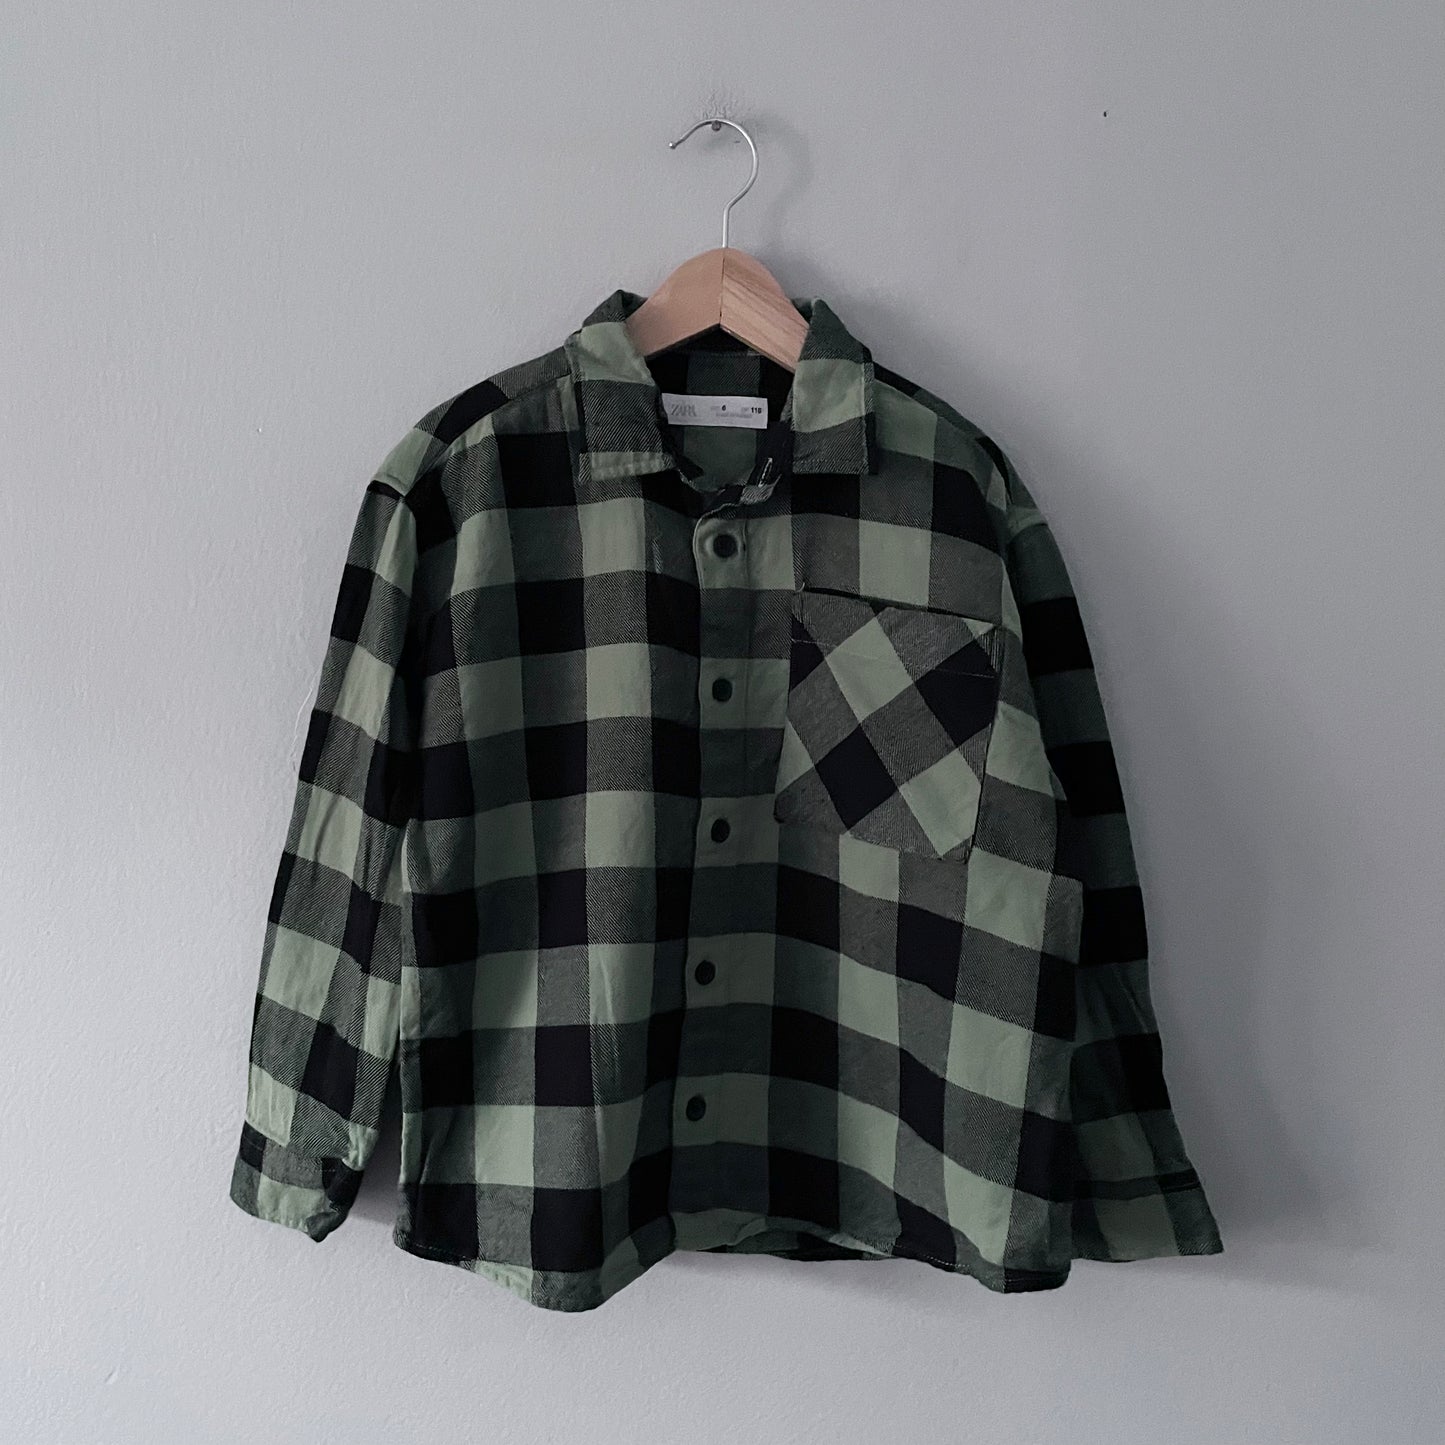 Zara / Green x black plaid shirt / 6Y